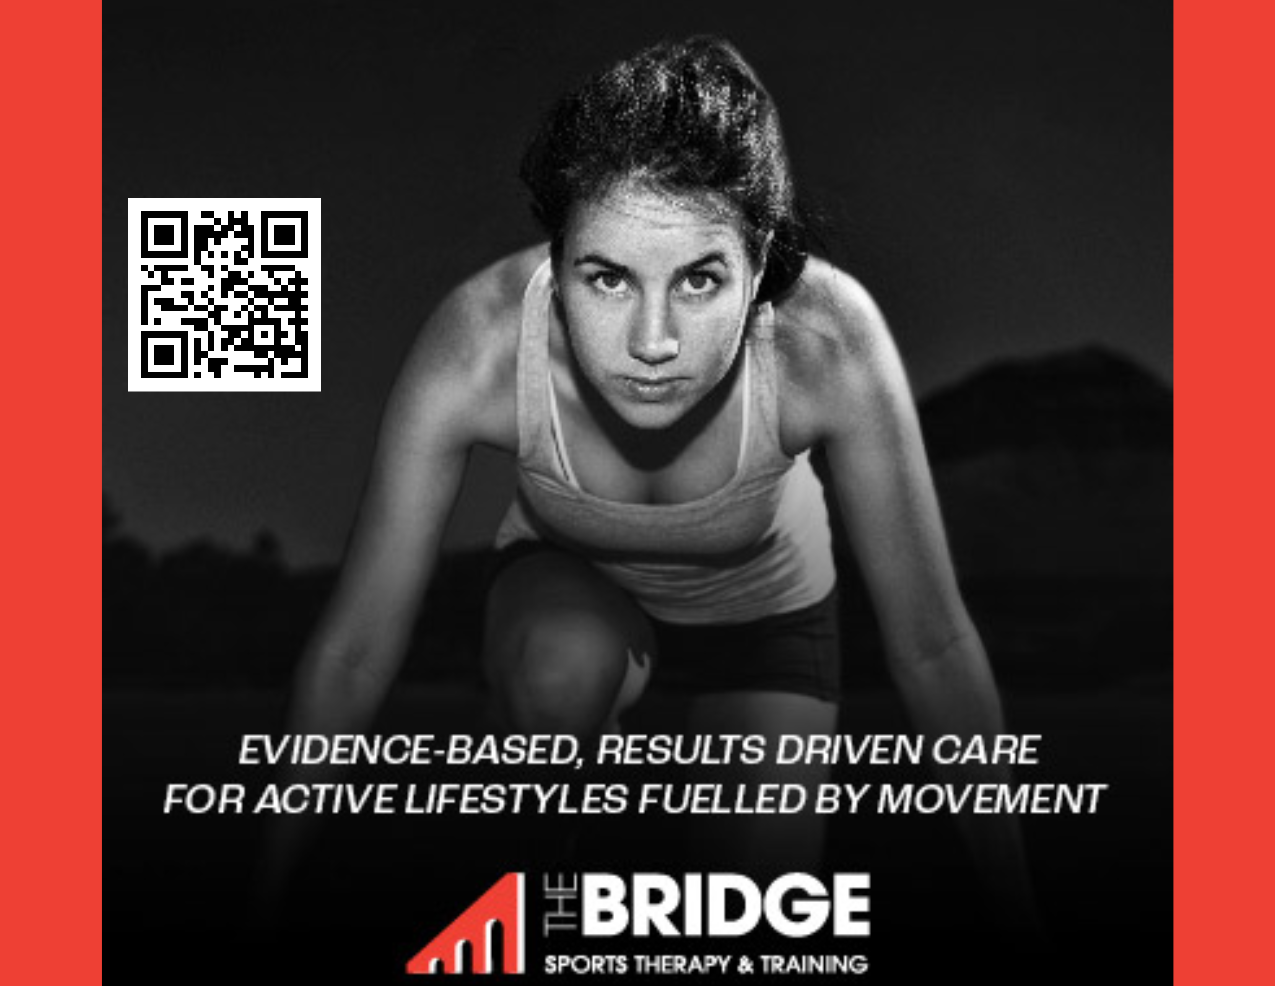 The Bridge Sports Therapy & Training